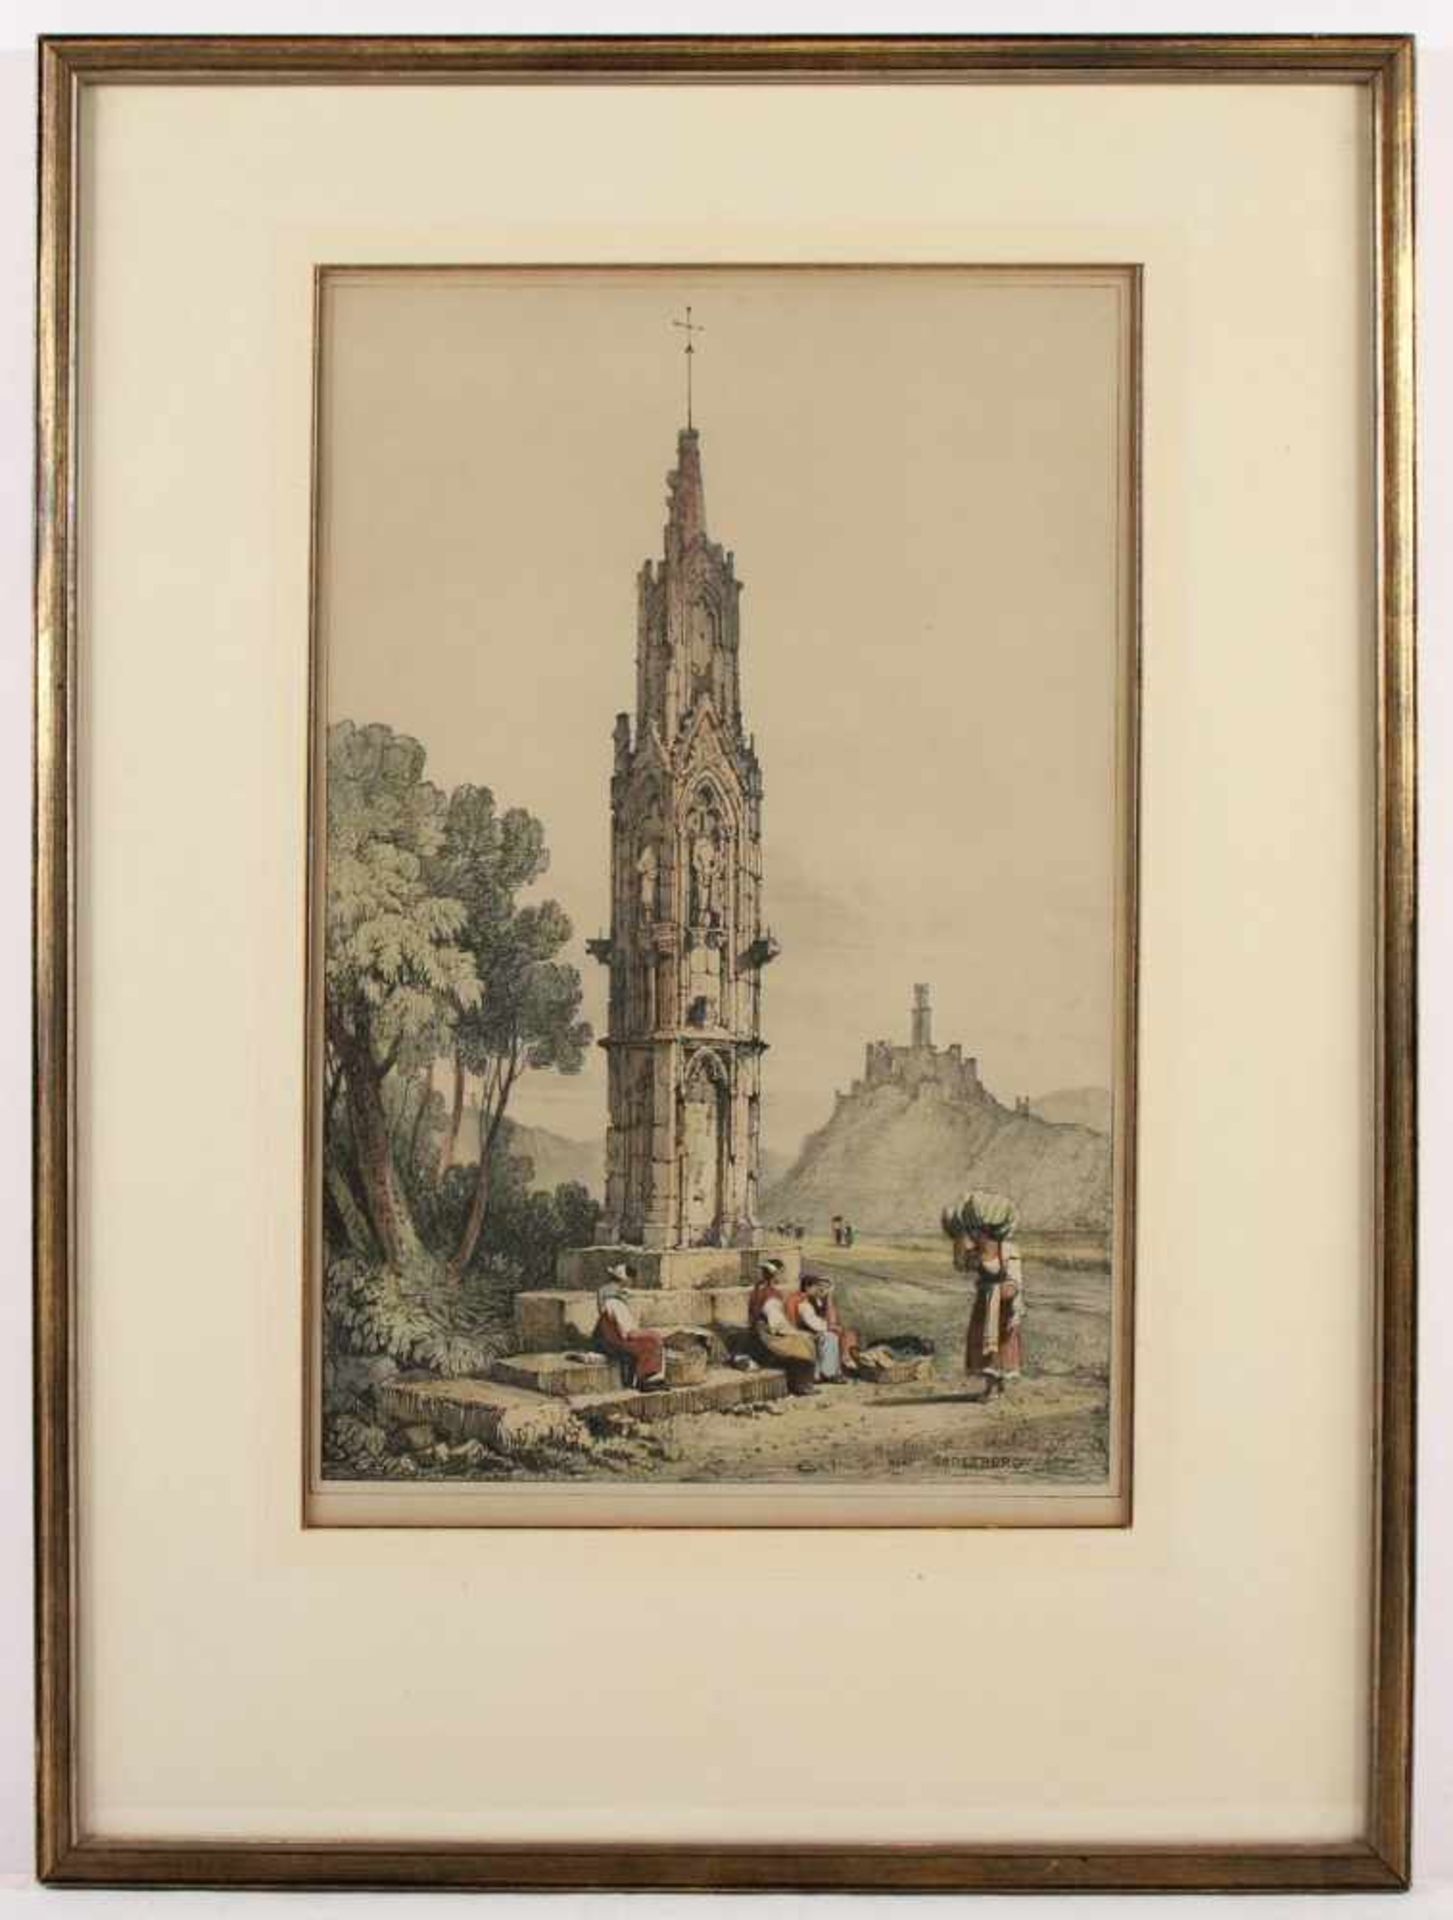 BONN GODESBERG - HOCHKREUZ, kolorierte Lithografie, 40 x 25,5, um 1840, R.